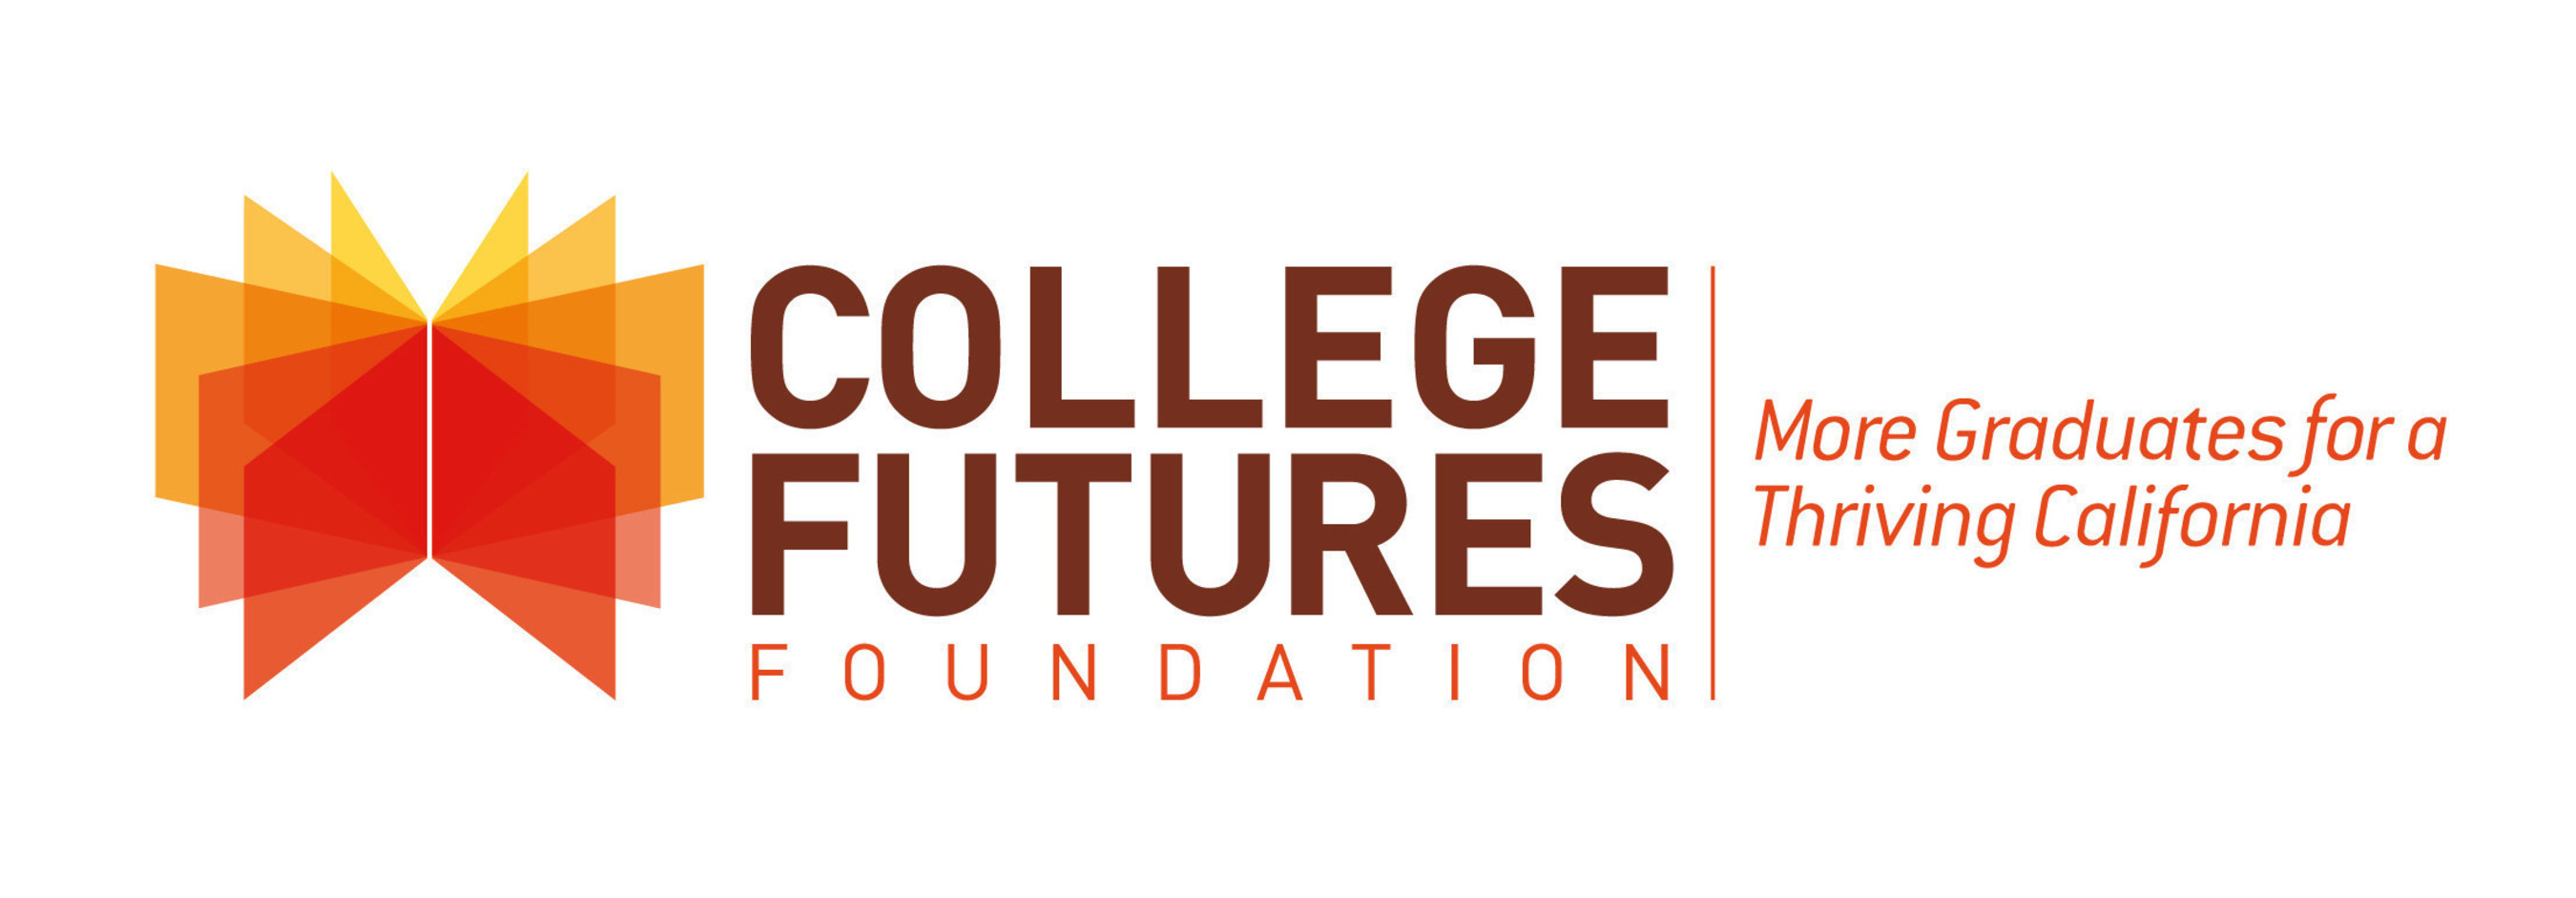 College Futures Foundation Logo (PRNewsFoto/College Futures Foundation)